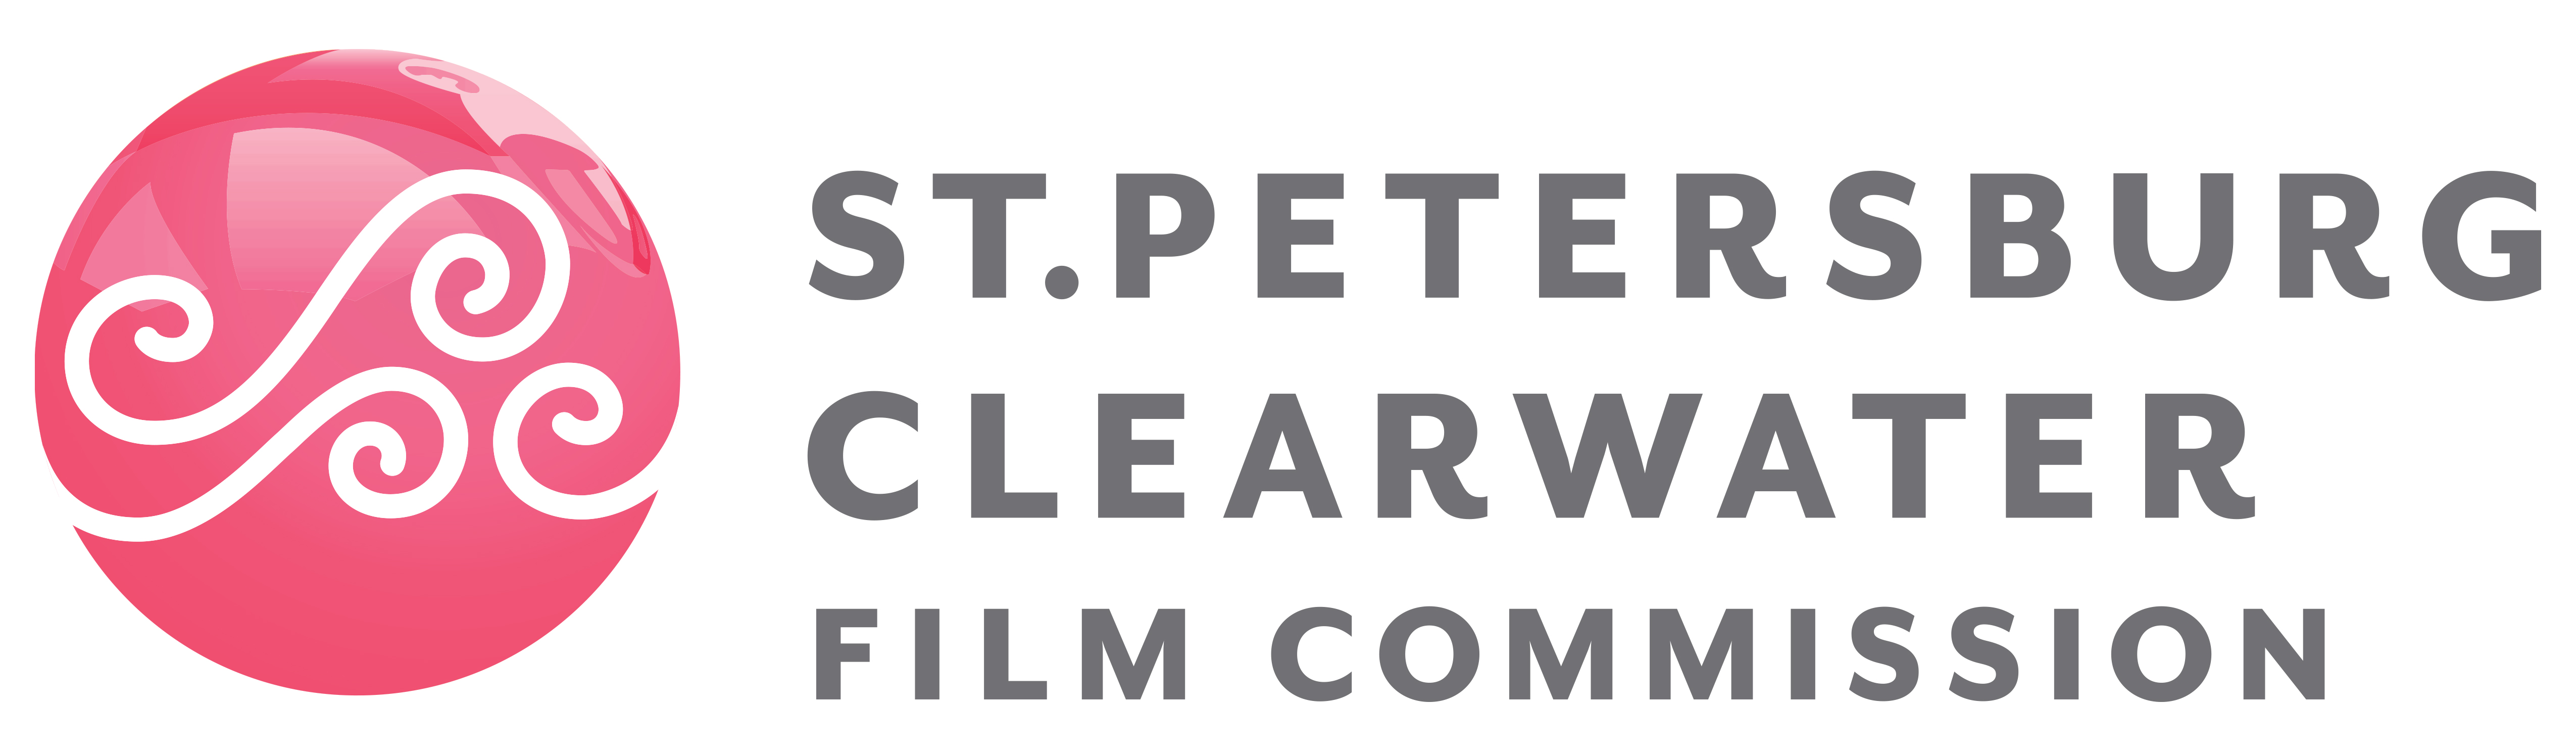 Film Commission Website